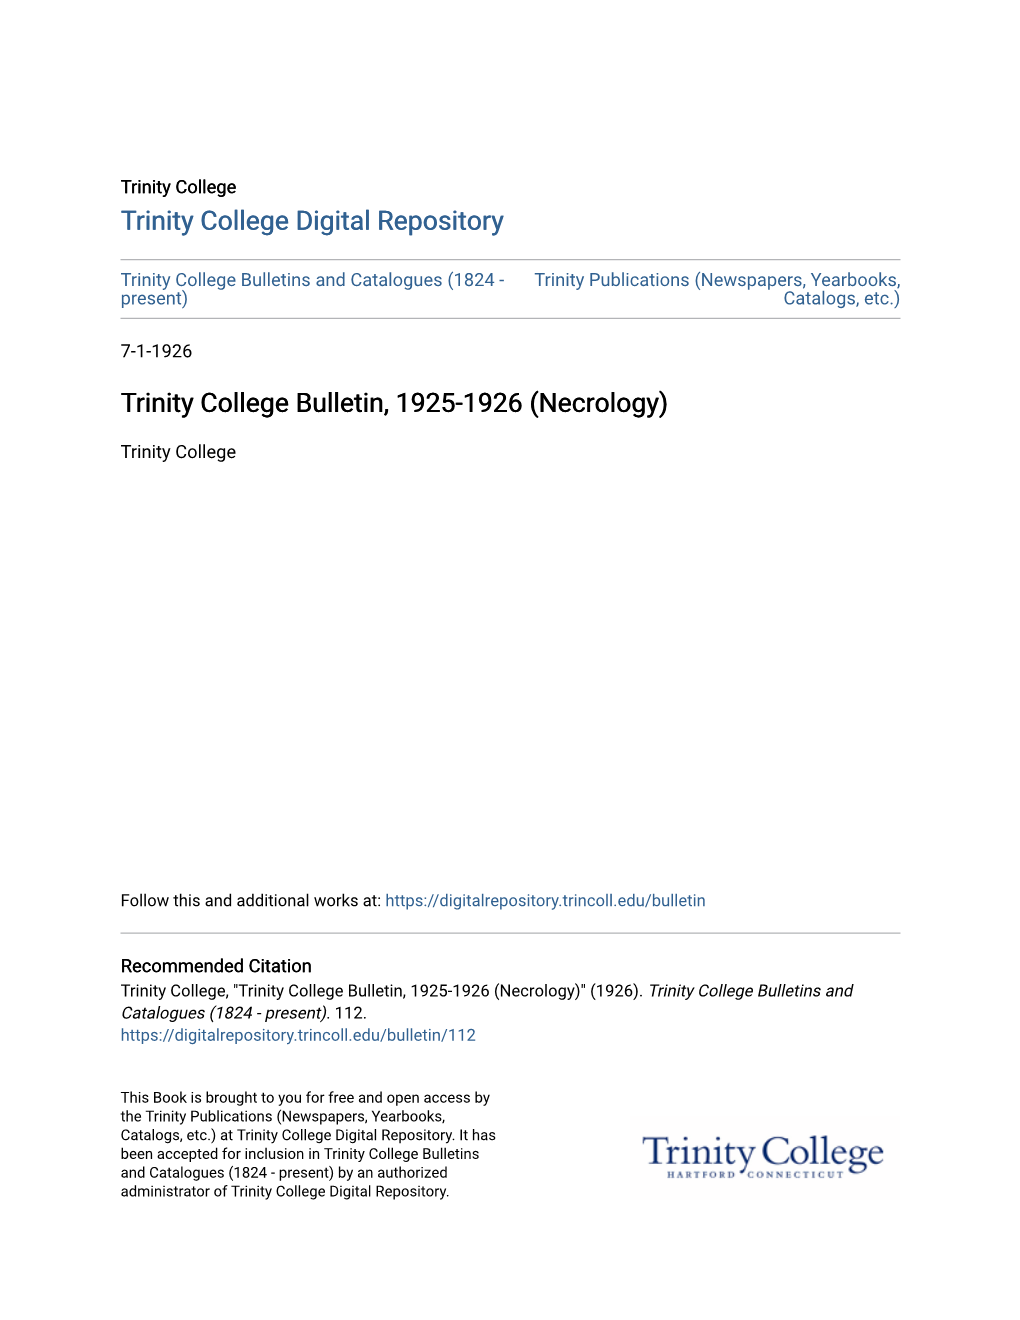 Trinity College Bulletin, 1925-1926 (Necrology)